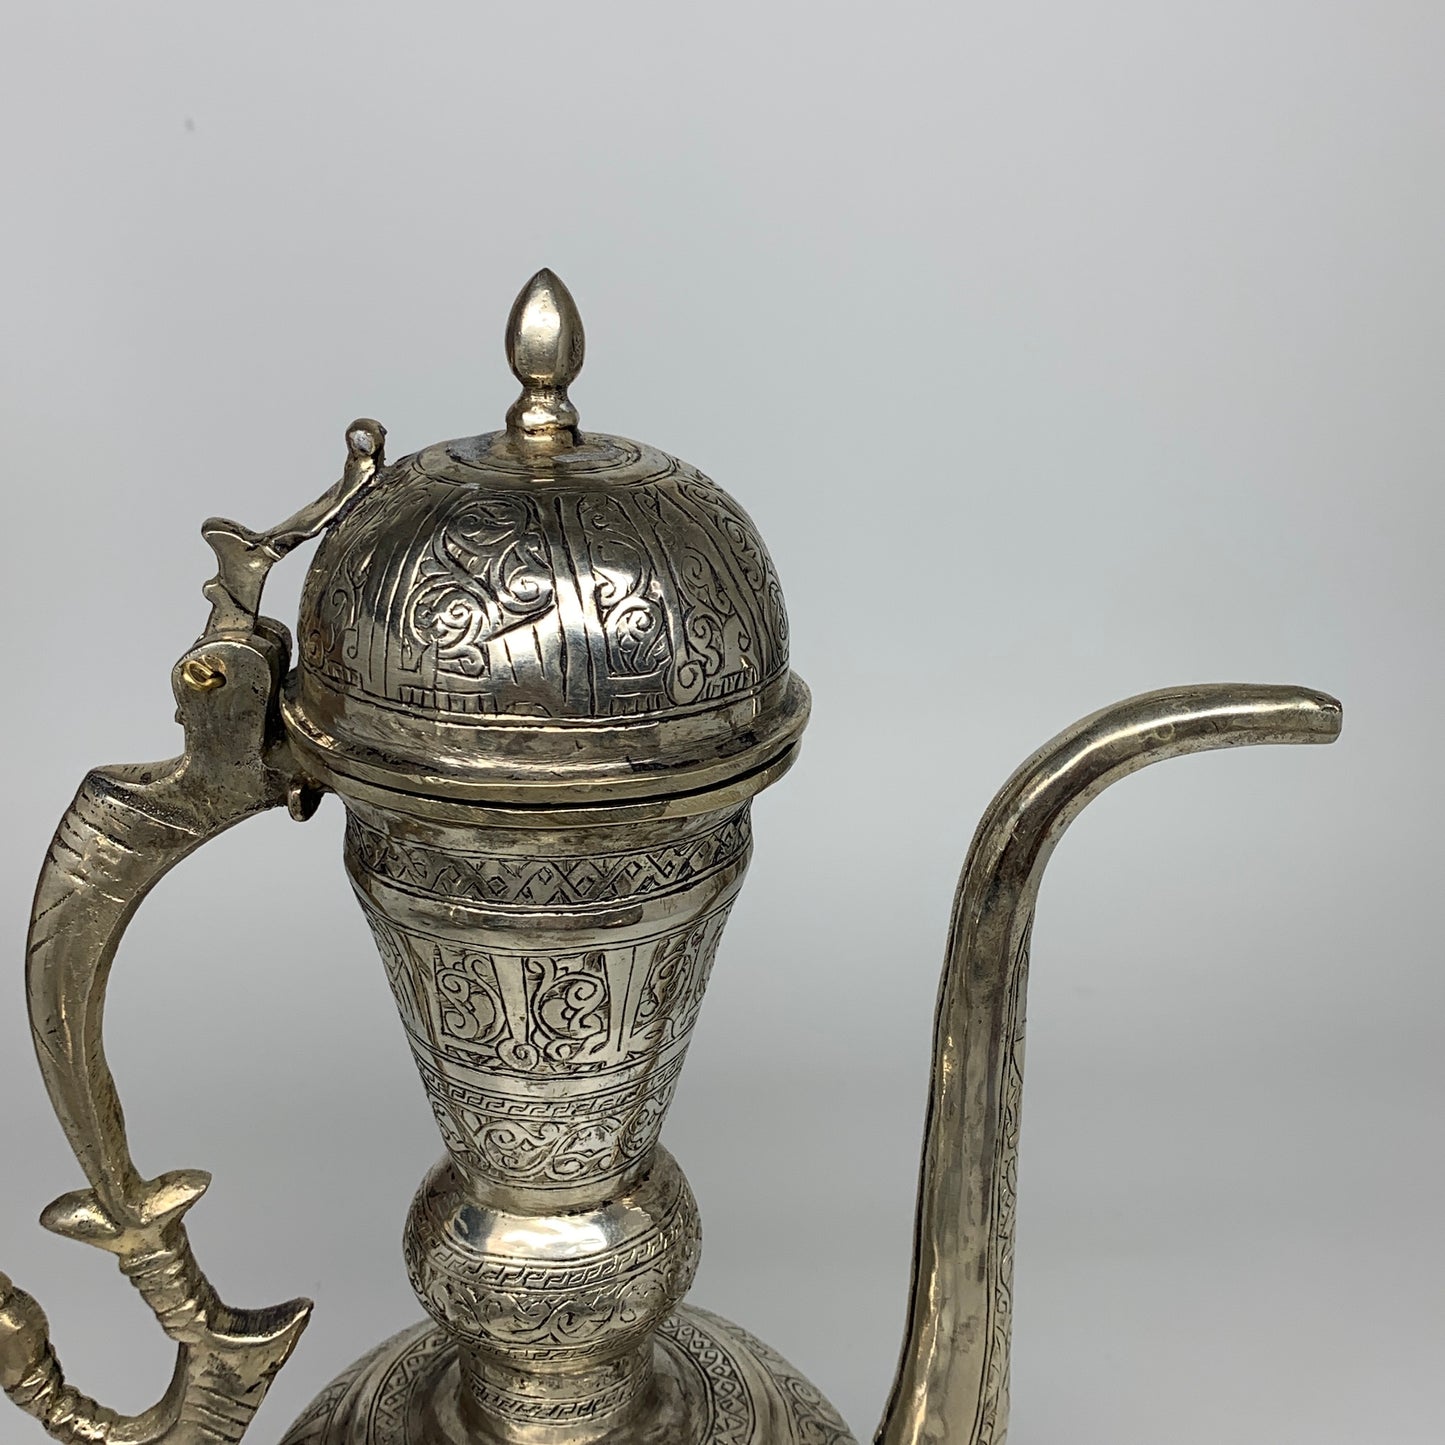 1096g,14.5"x6.5" Handmade Antique Pitcher Ewer Brass/Copper @Afghanistan, P152